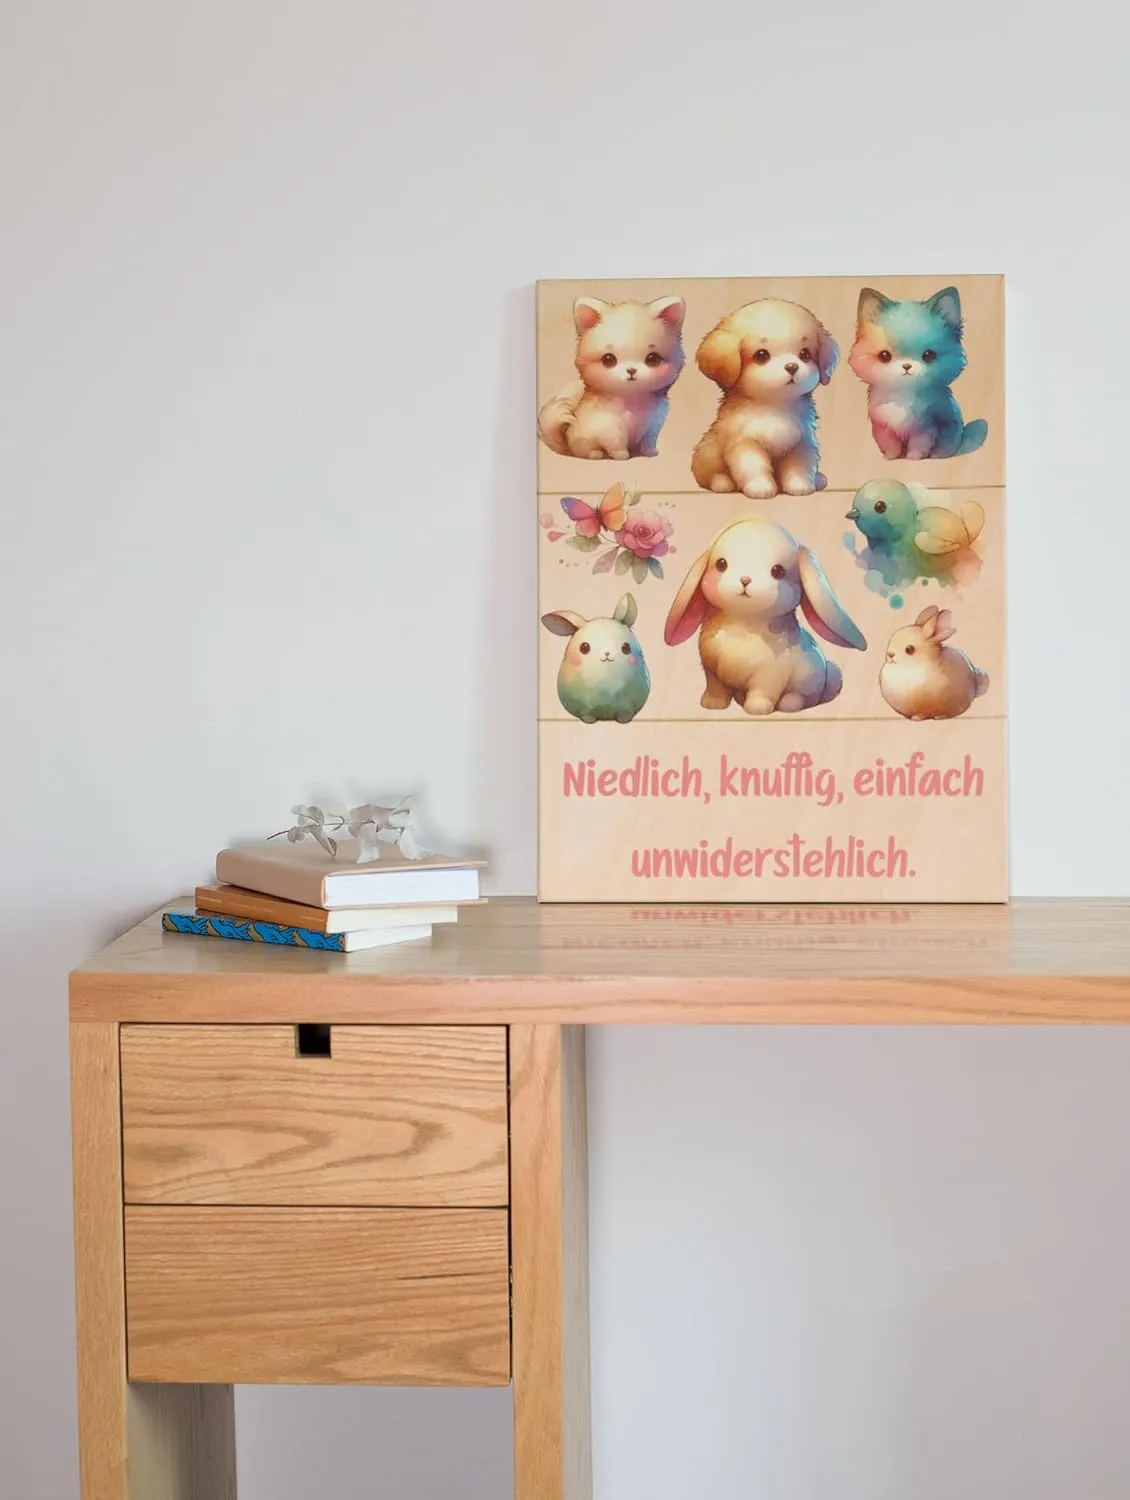 Personalisierte Birkenholz-Fototafel - Romantische Wasserfarben Tiere